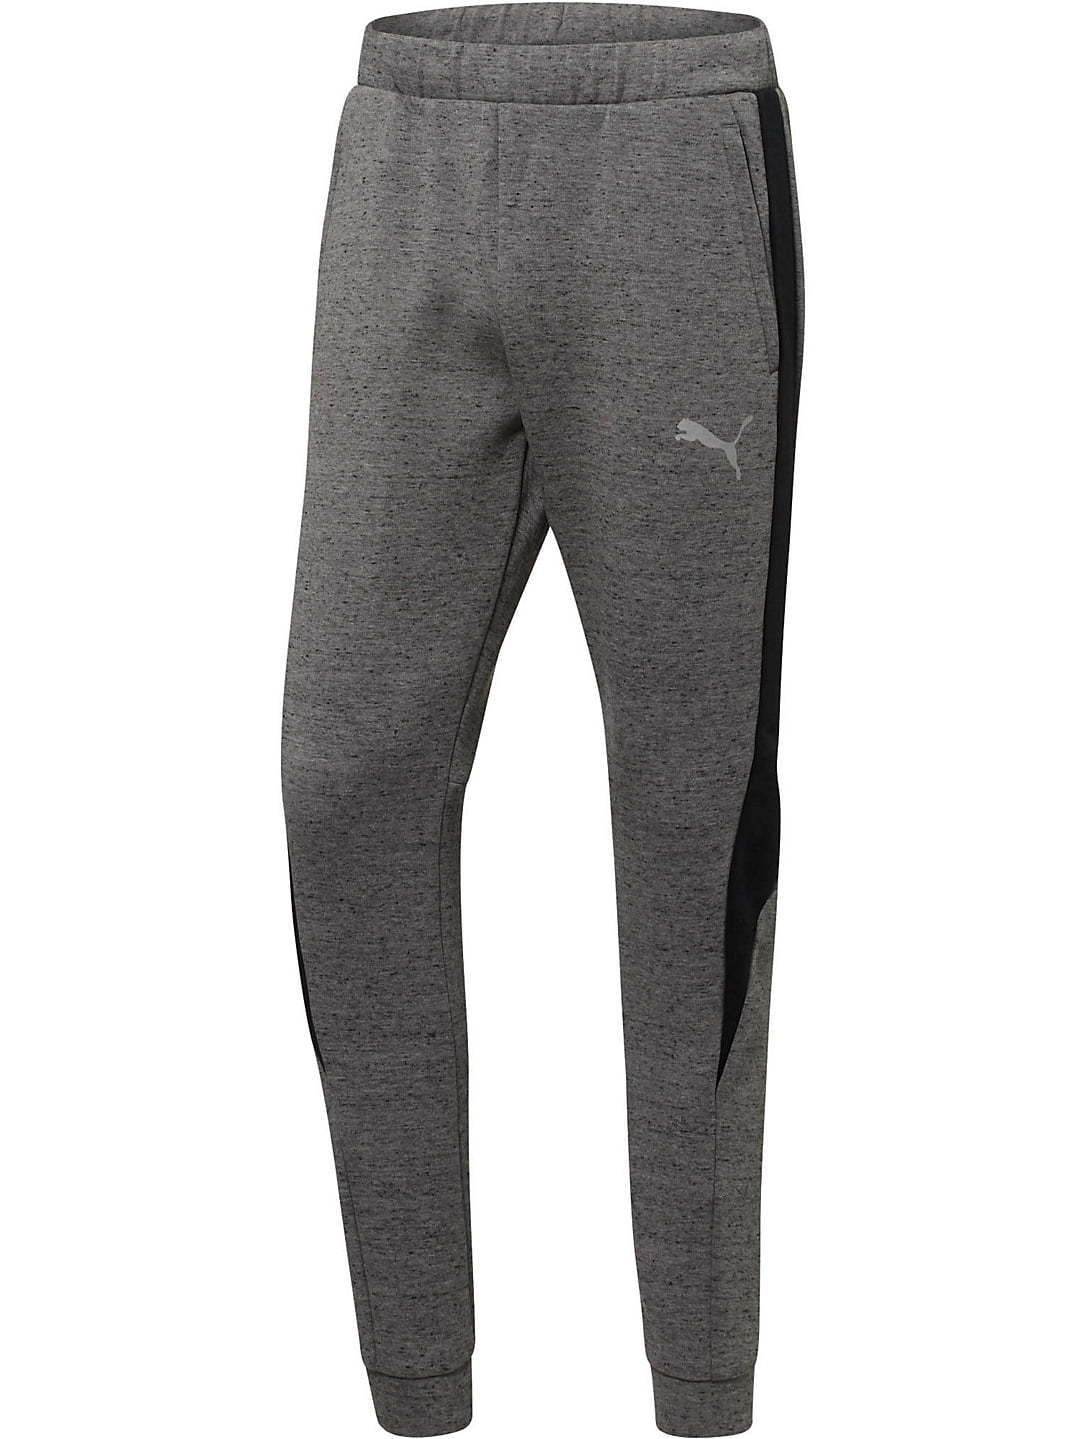 Evostripe Proknit Men's Pants Medium Grey Heather/Black 838286-03 - Walmart.com